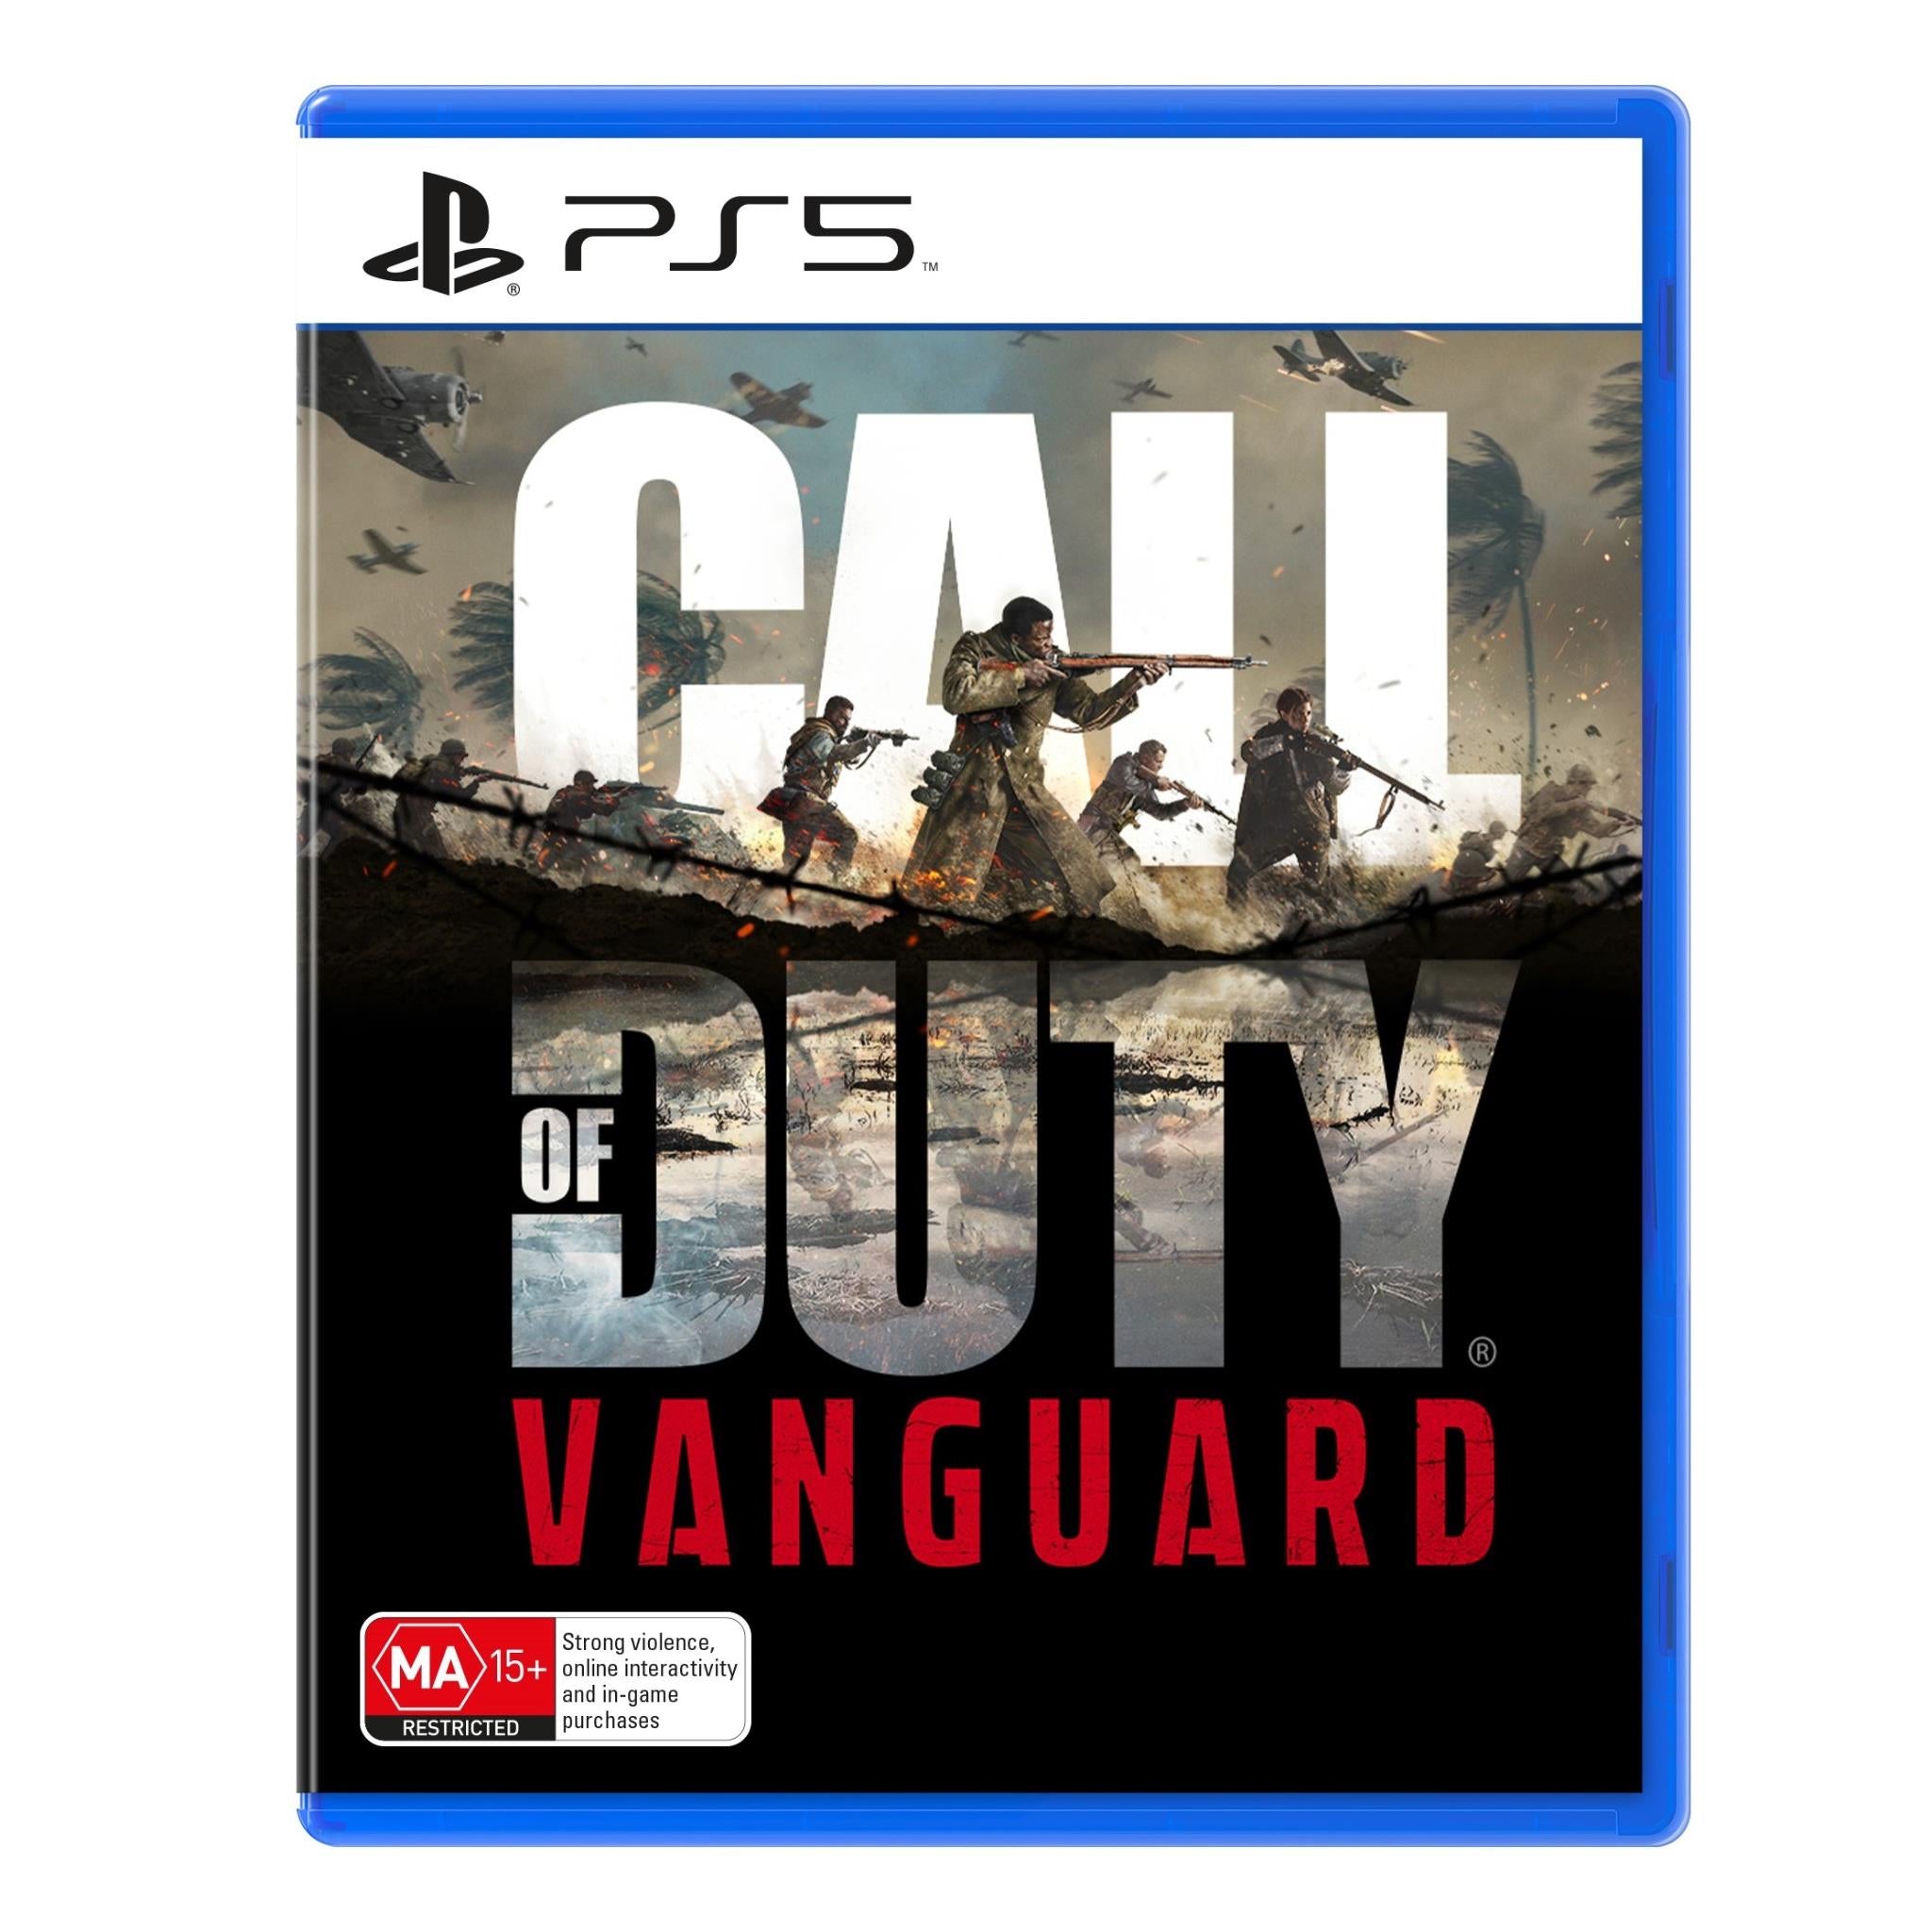 call of duty: vanguard